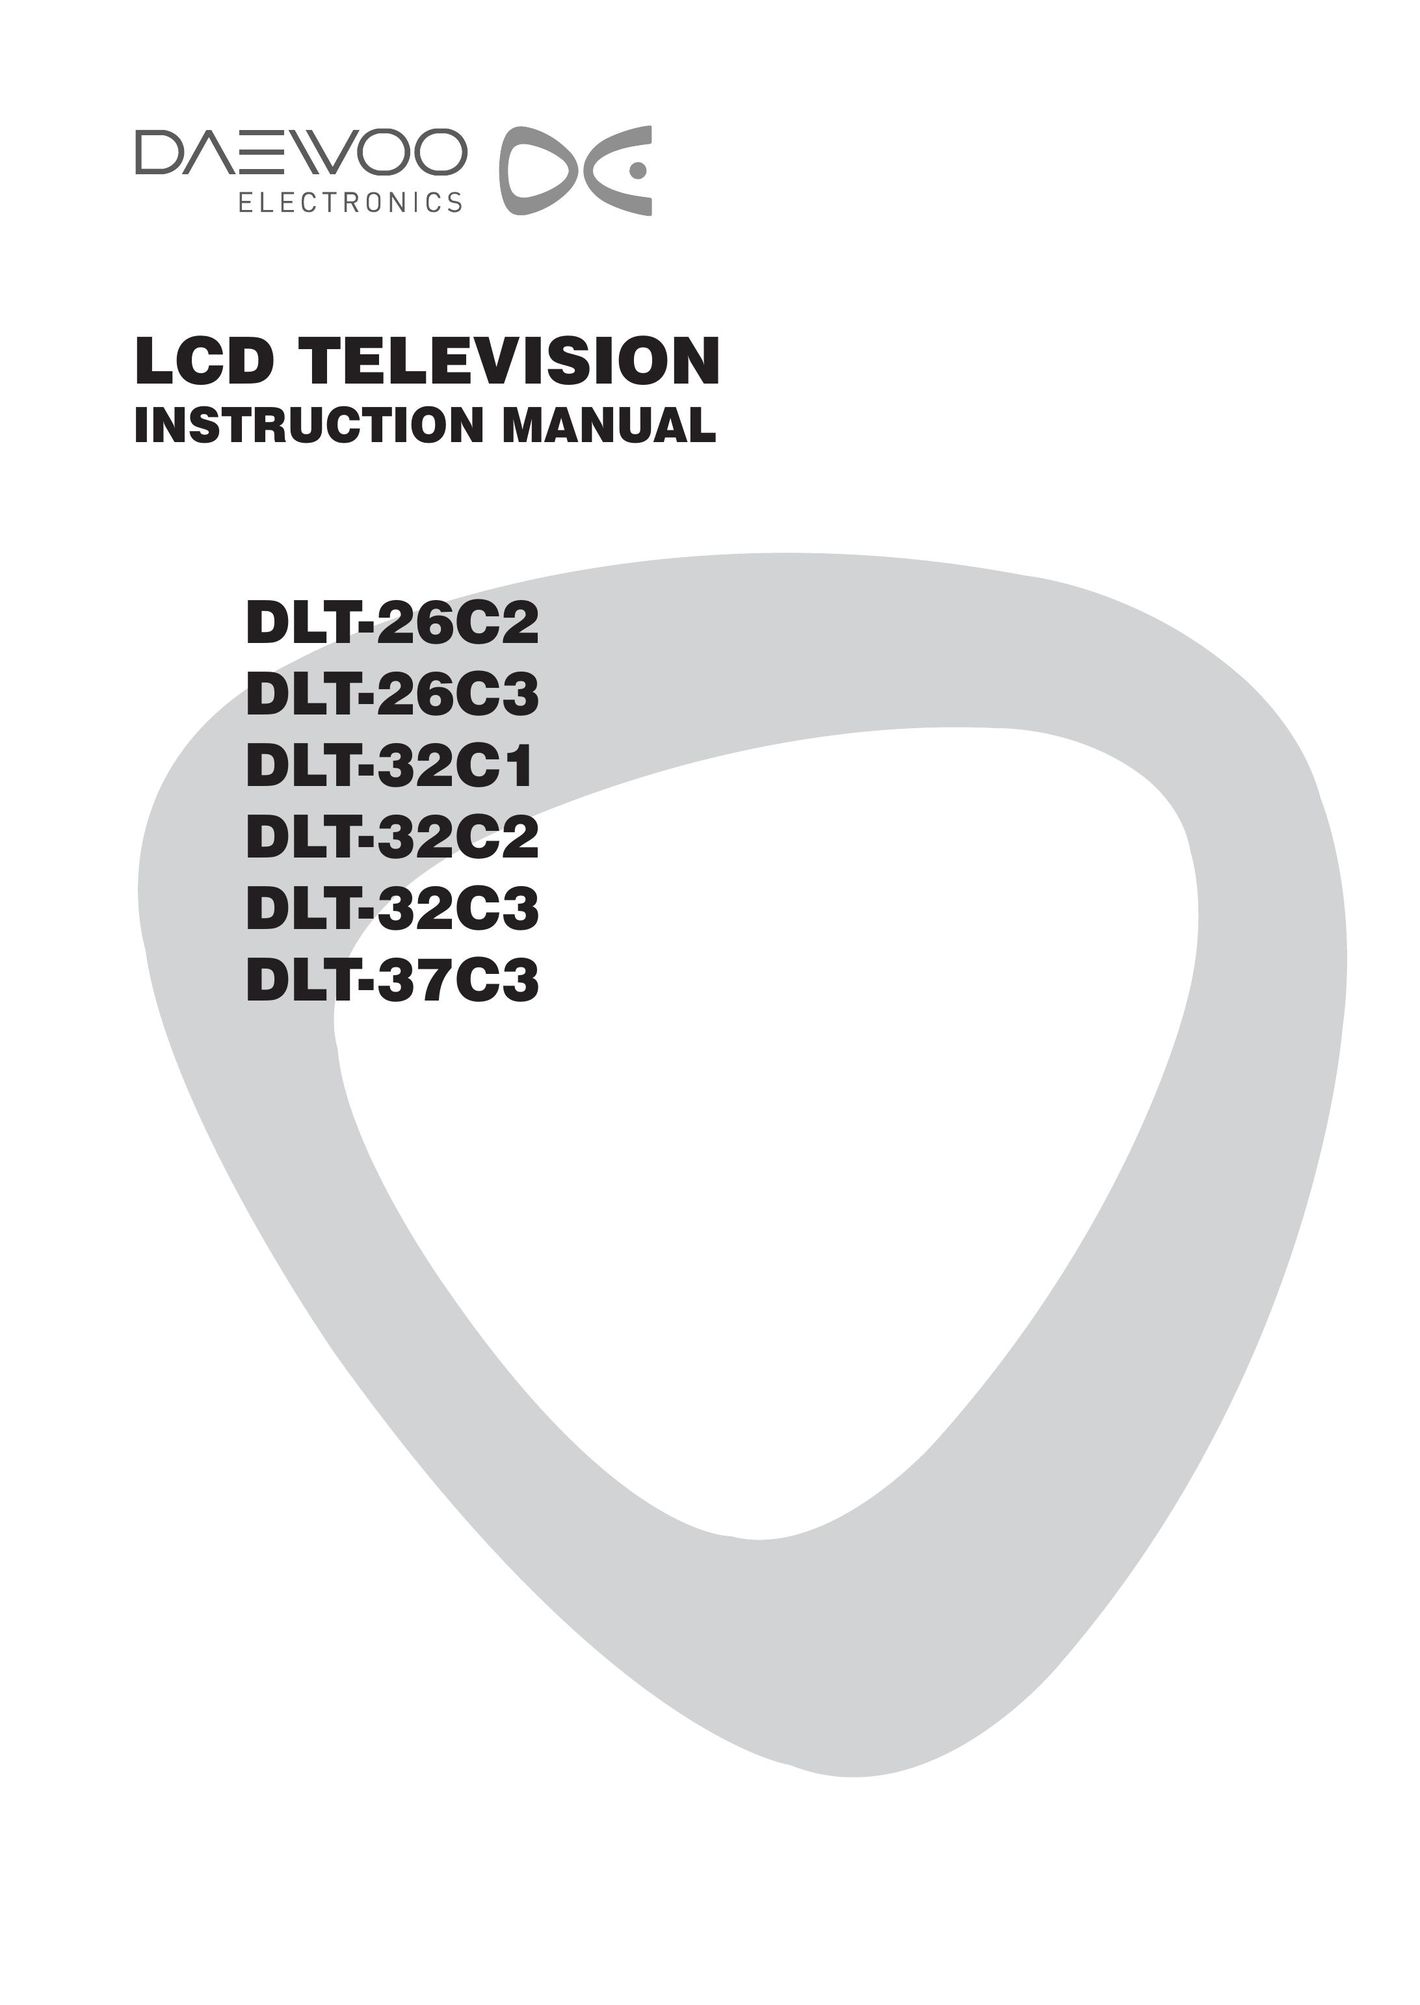 Daewoo DLT-26C2, DLT-26C3, DLT-32C1, DLT-32C2, DLT-32C3, DLT-37C3 Flat Panel Television User Manual